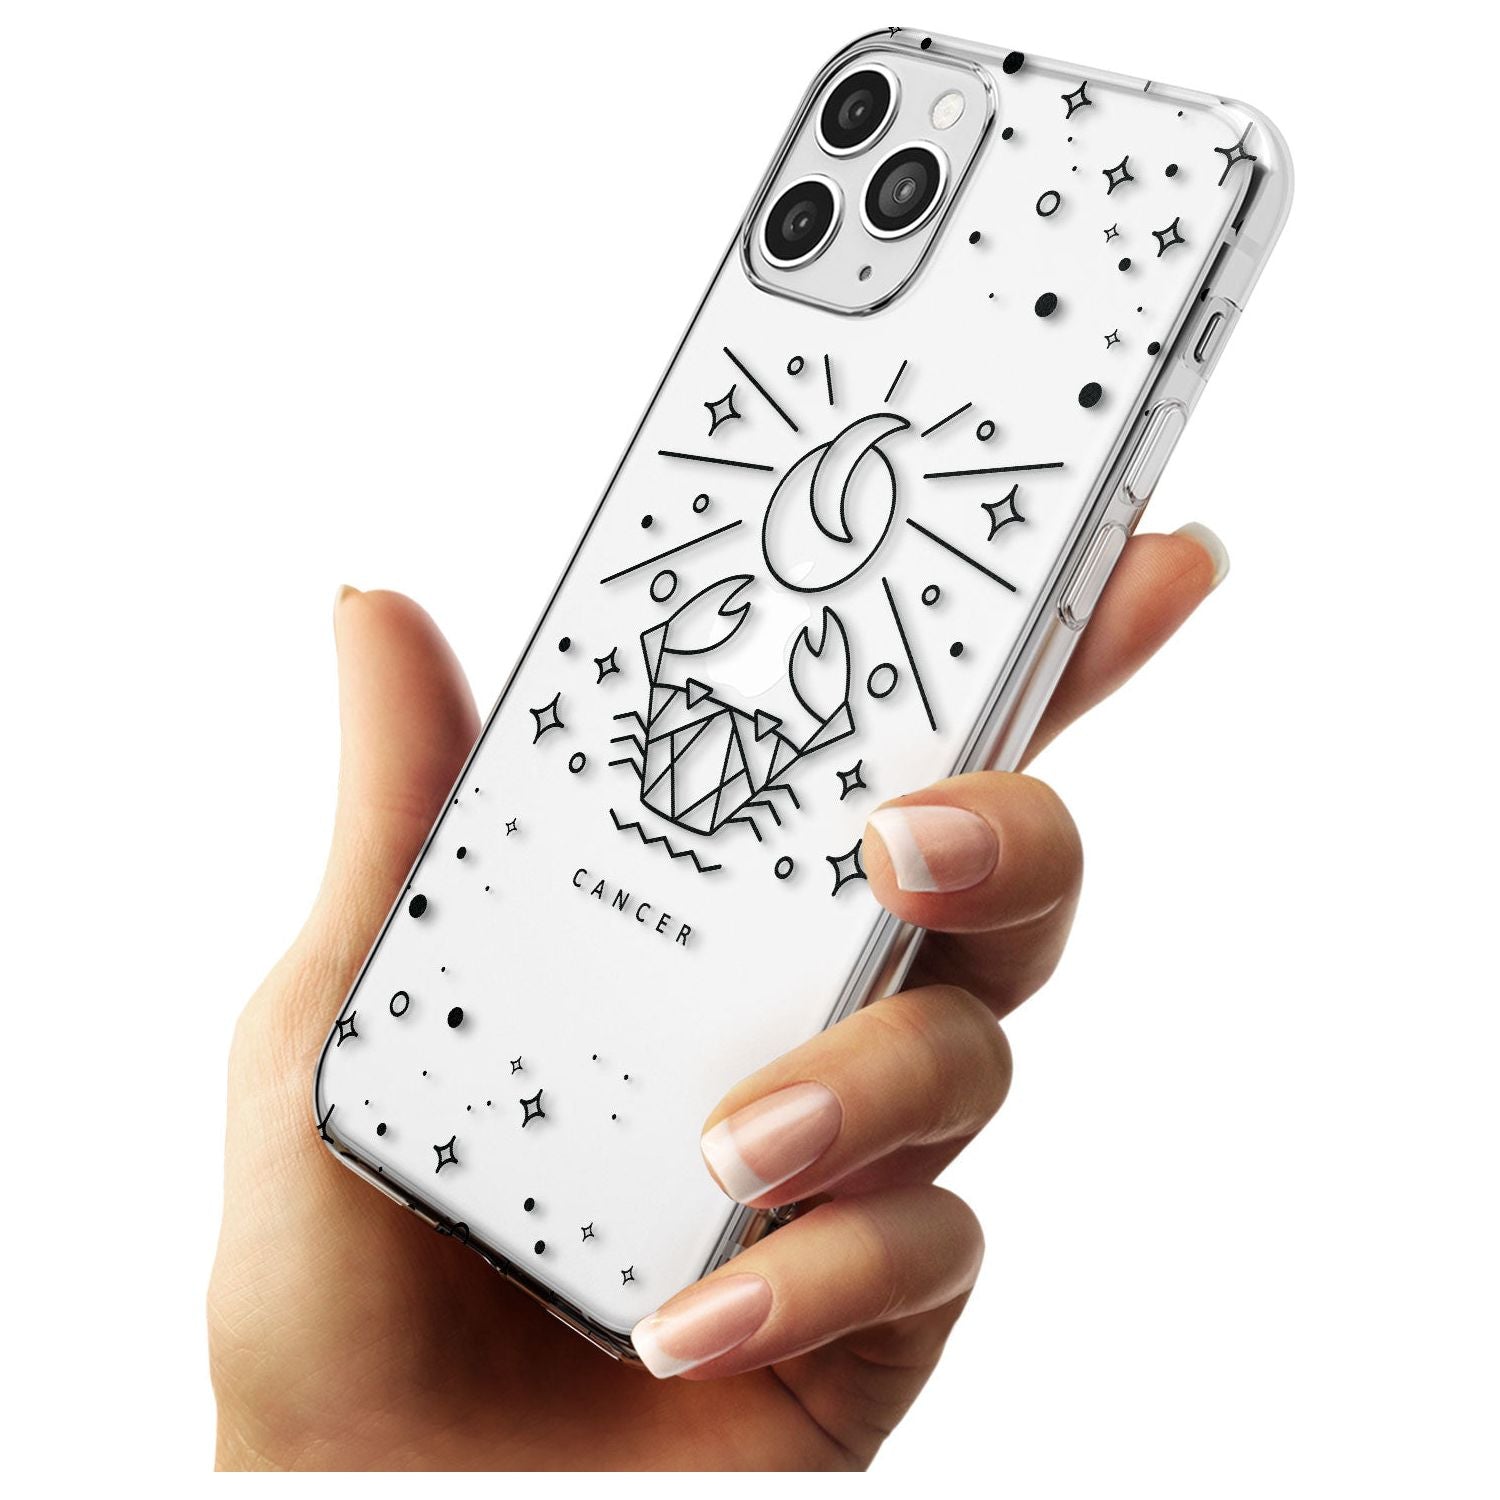 Cancer Emblem - Transparent Design Slim TPU Phone Case for iPhone 11 Pro Max